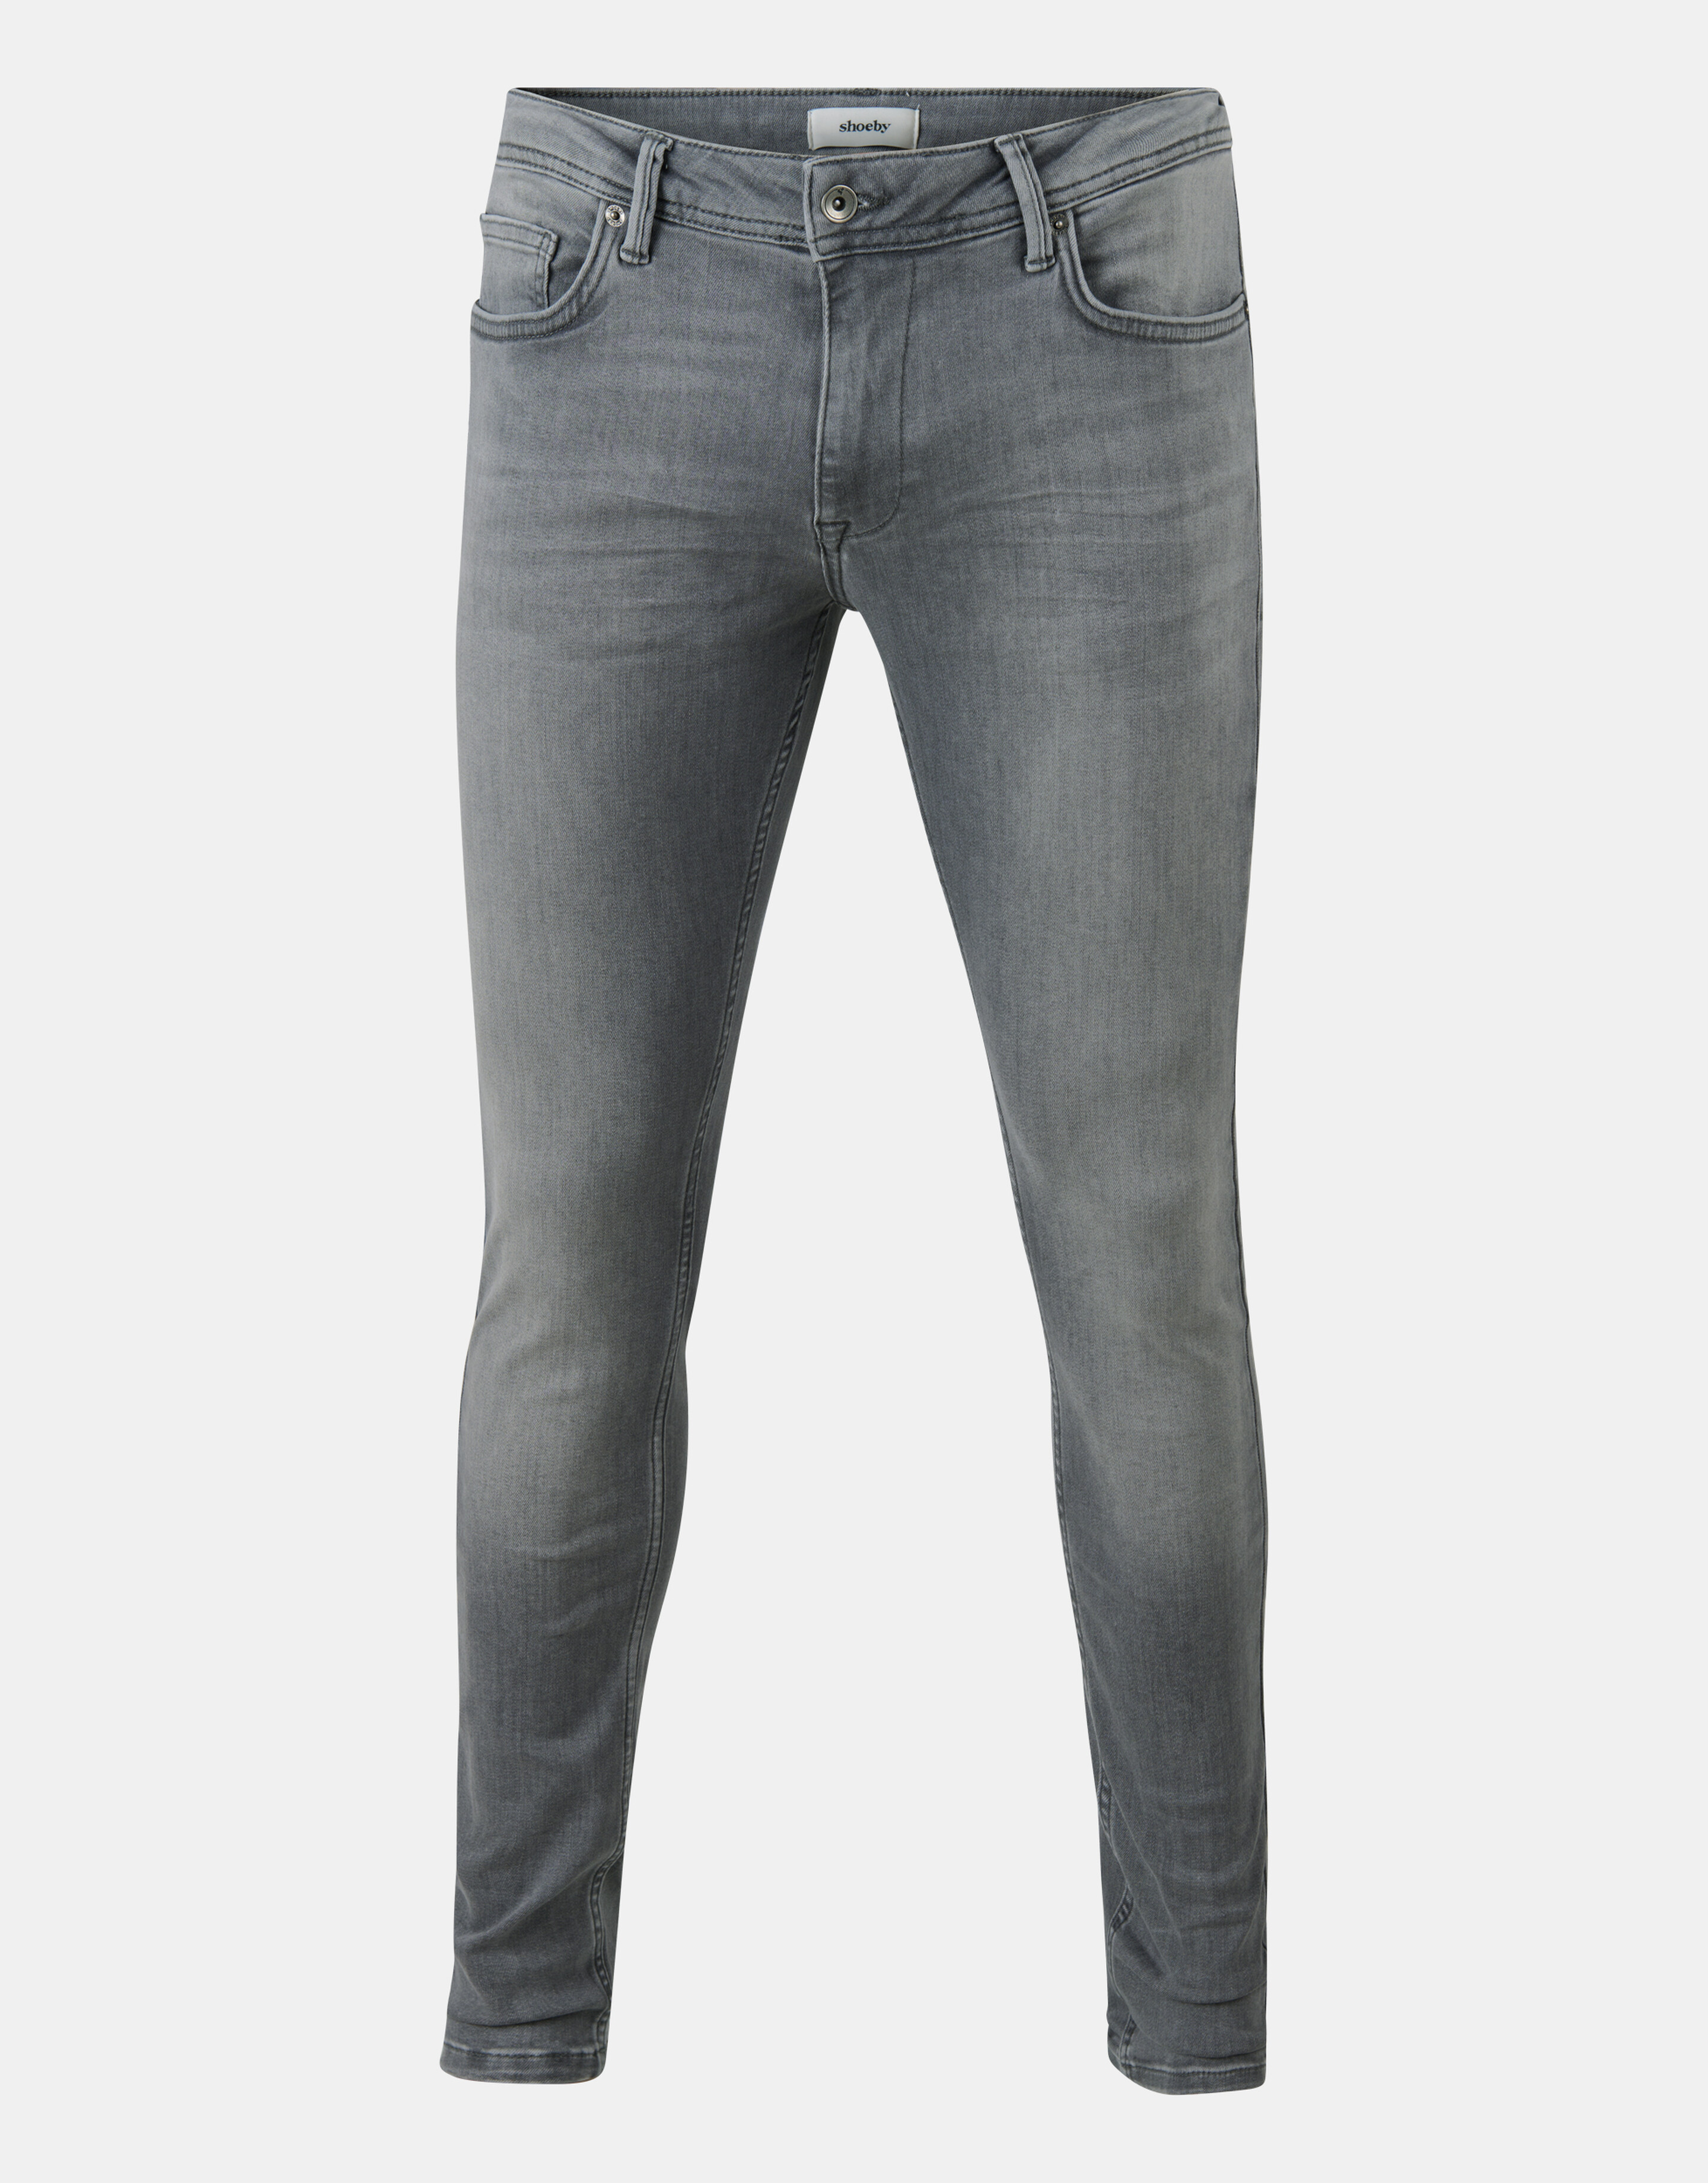 Leroy Skinny Jack Jeans L32 Refill